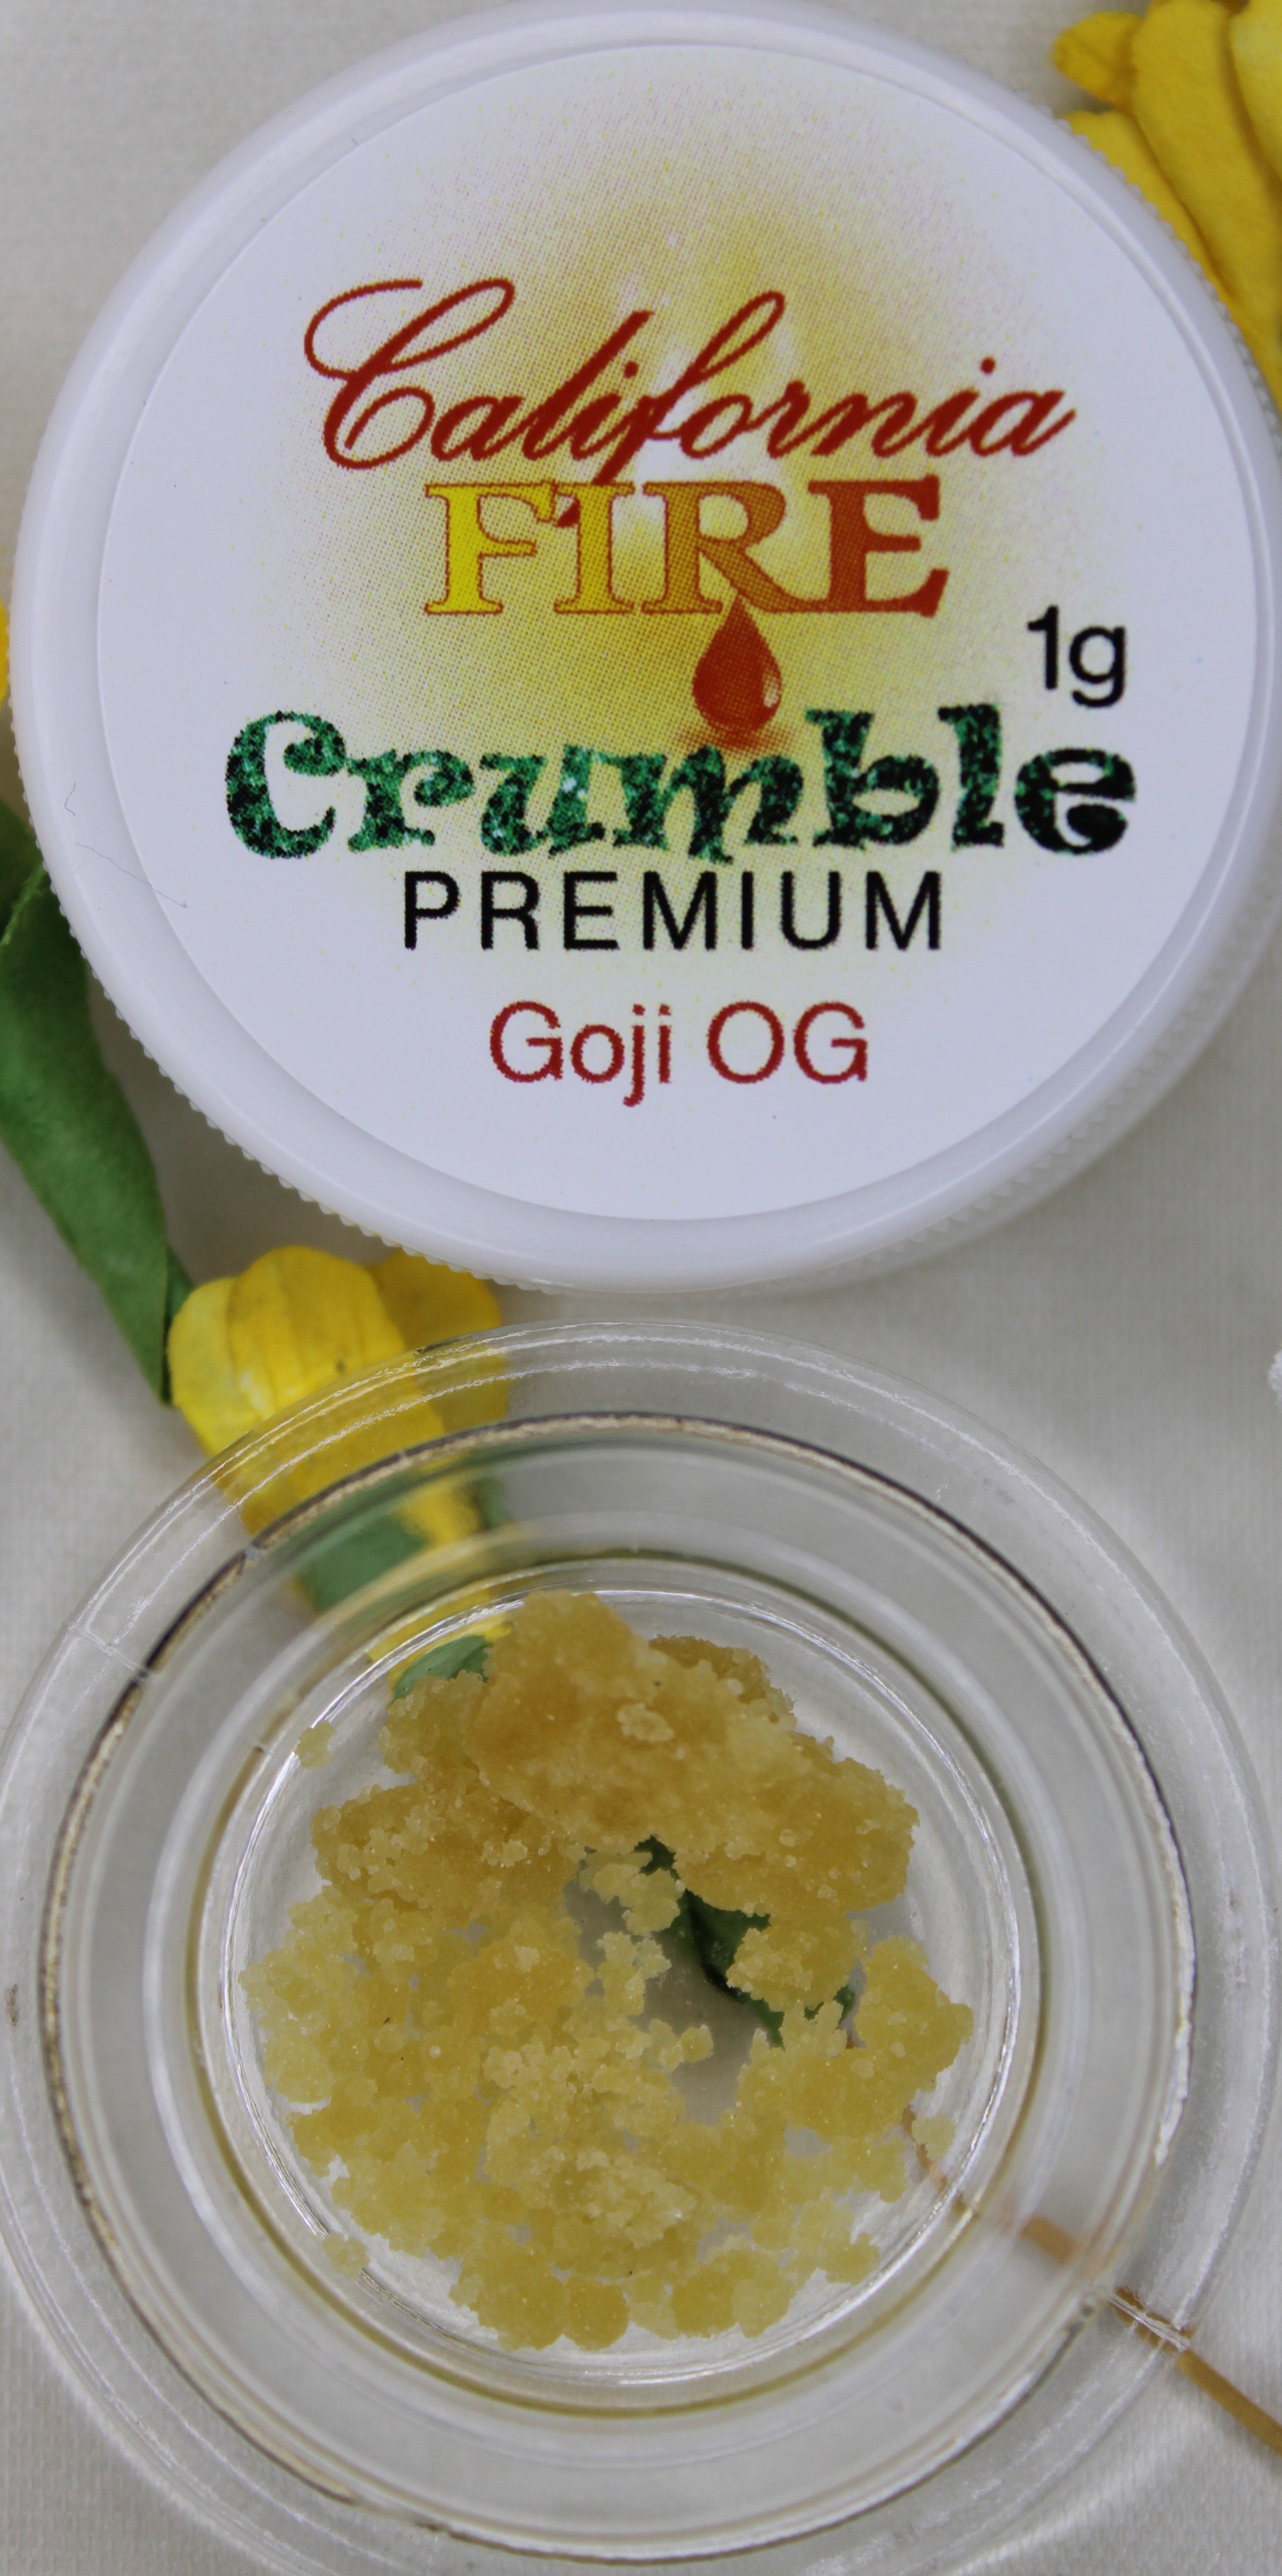 California Fire Premium Crumble "Gogi OG" (1g)